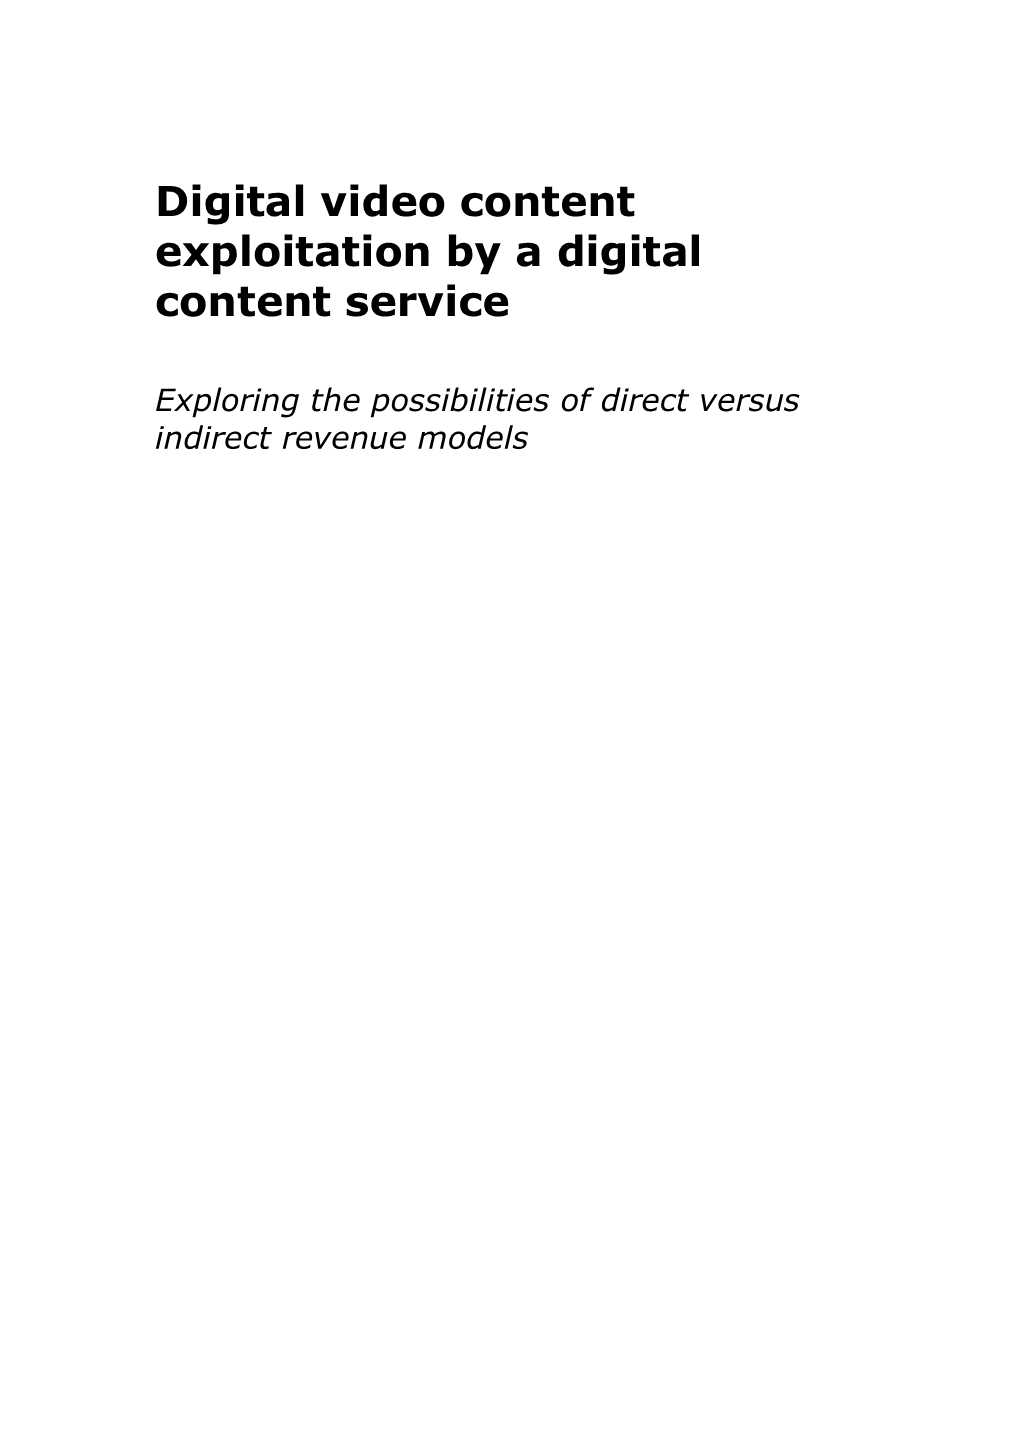 Digital Content Exploitation by a Digital Content Service